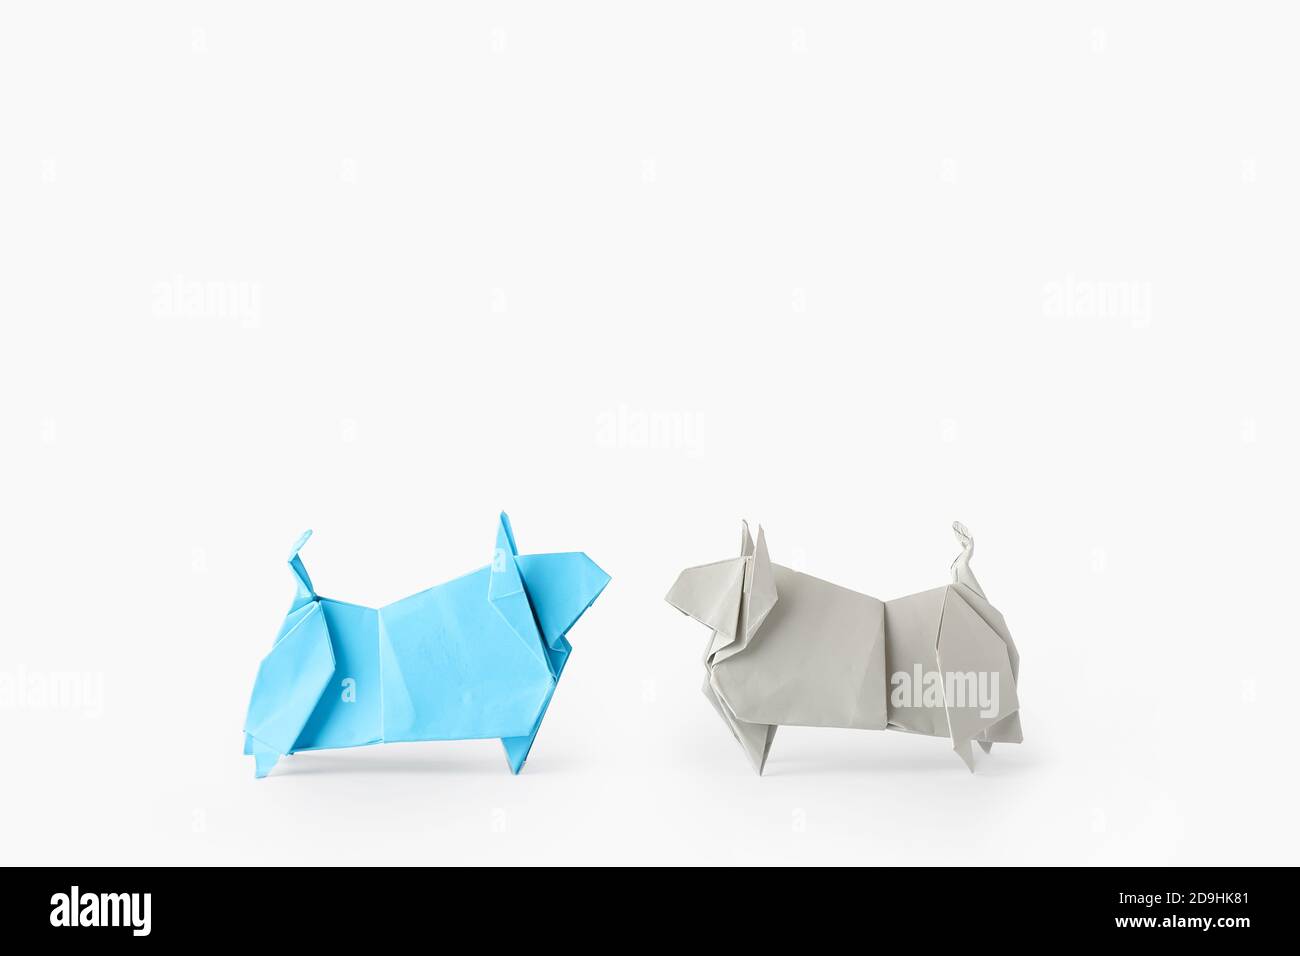 Origami bulls as symbol of year 2021 on white background Stock Photo